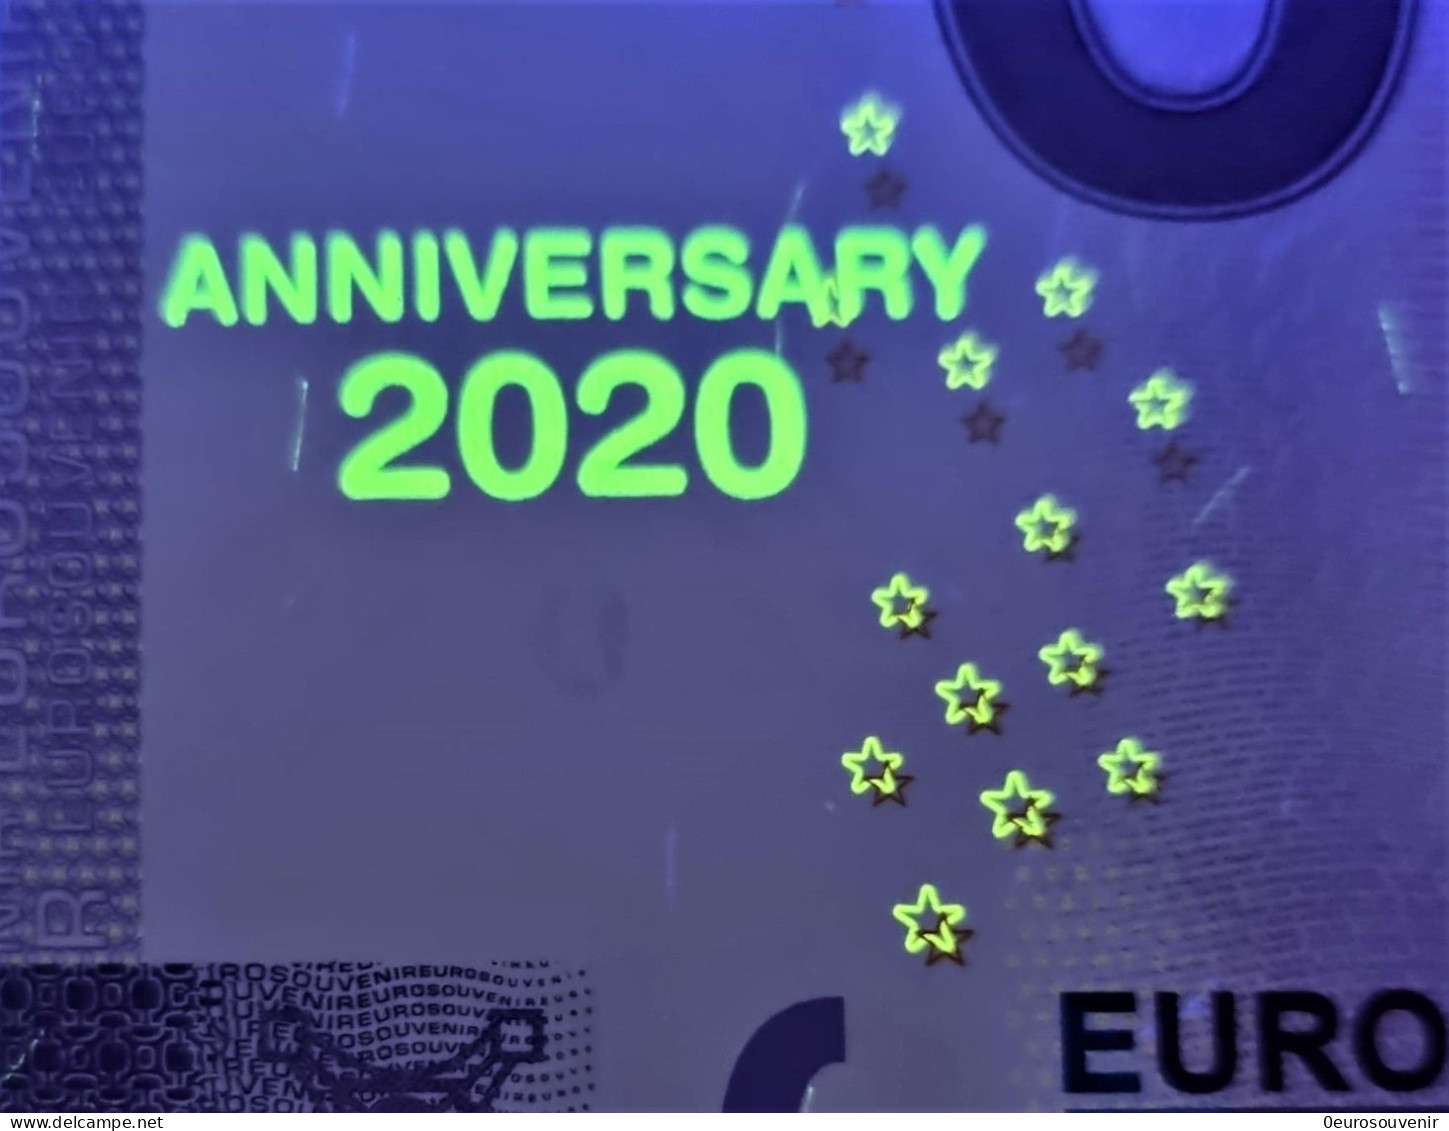 0-Euro XECV 2022-3 SEA LIFE CENTER OBERHAUSEN  Set NORMAL+ANNIVERSARY - Privatentwürfe